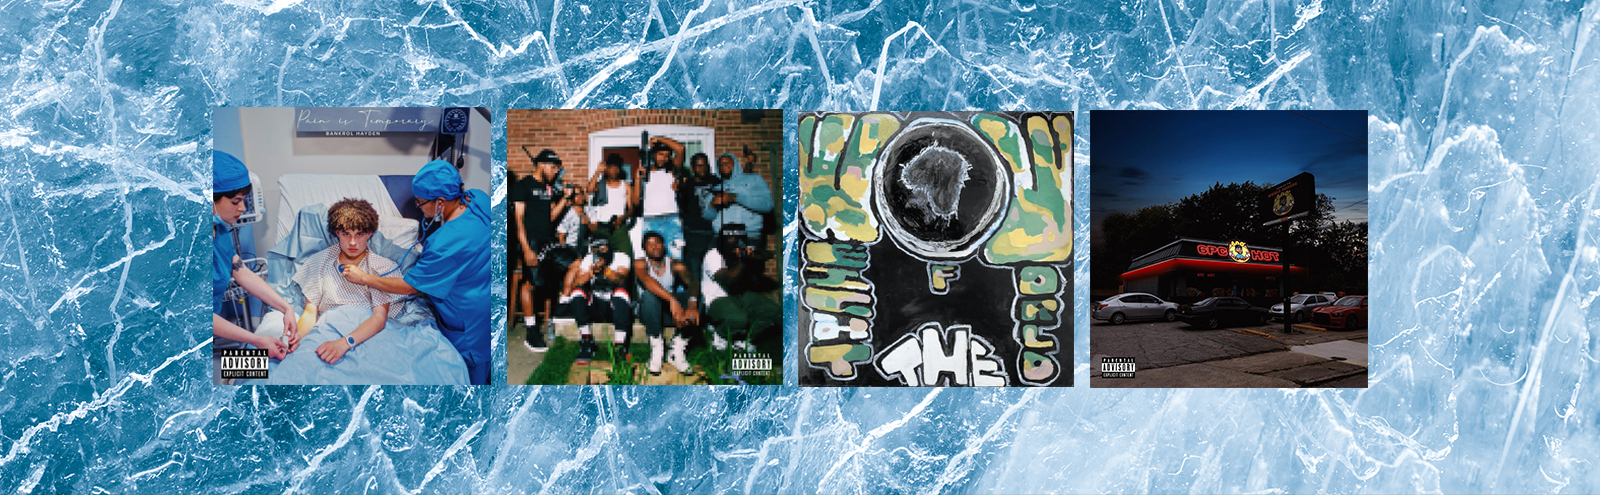 best new hip hop albums